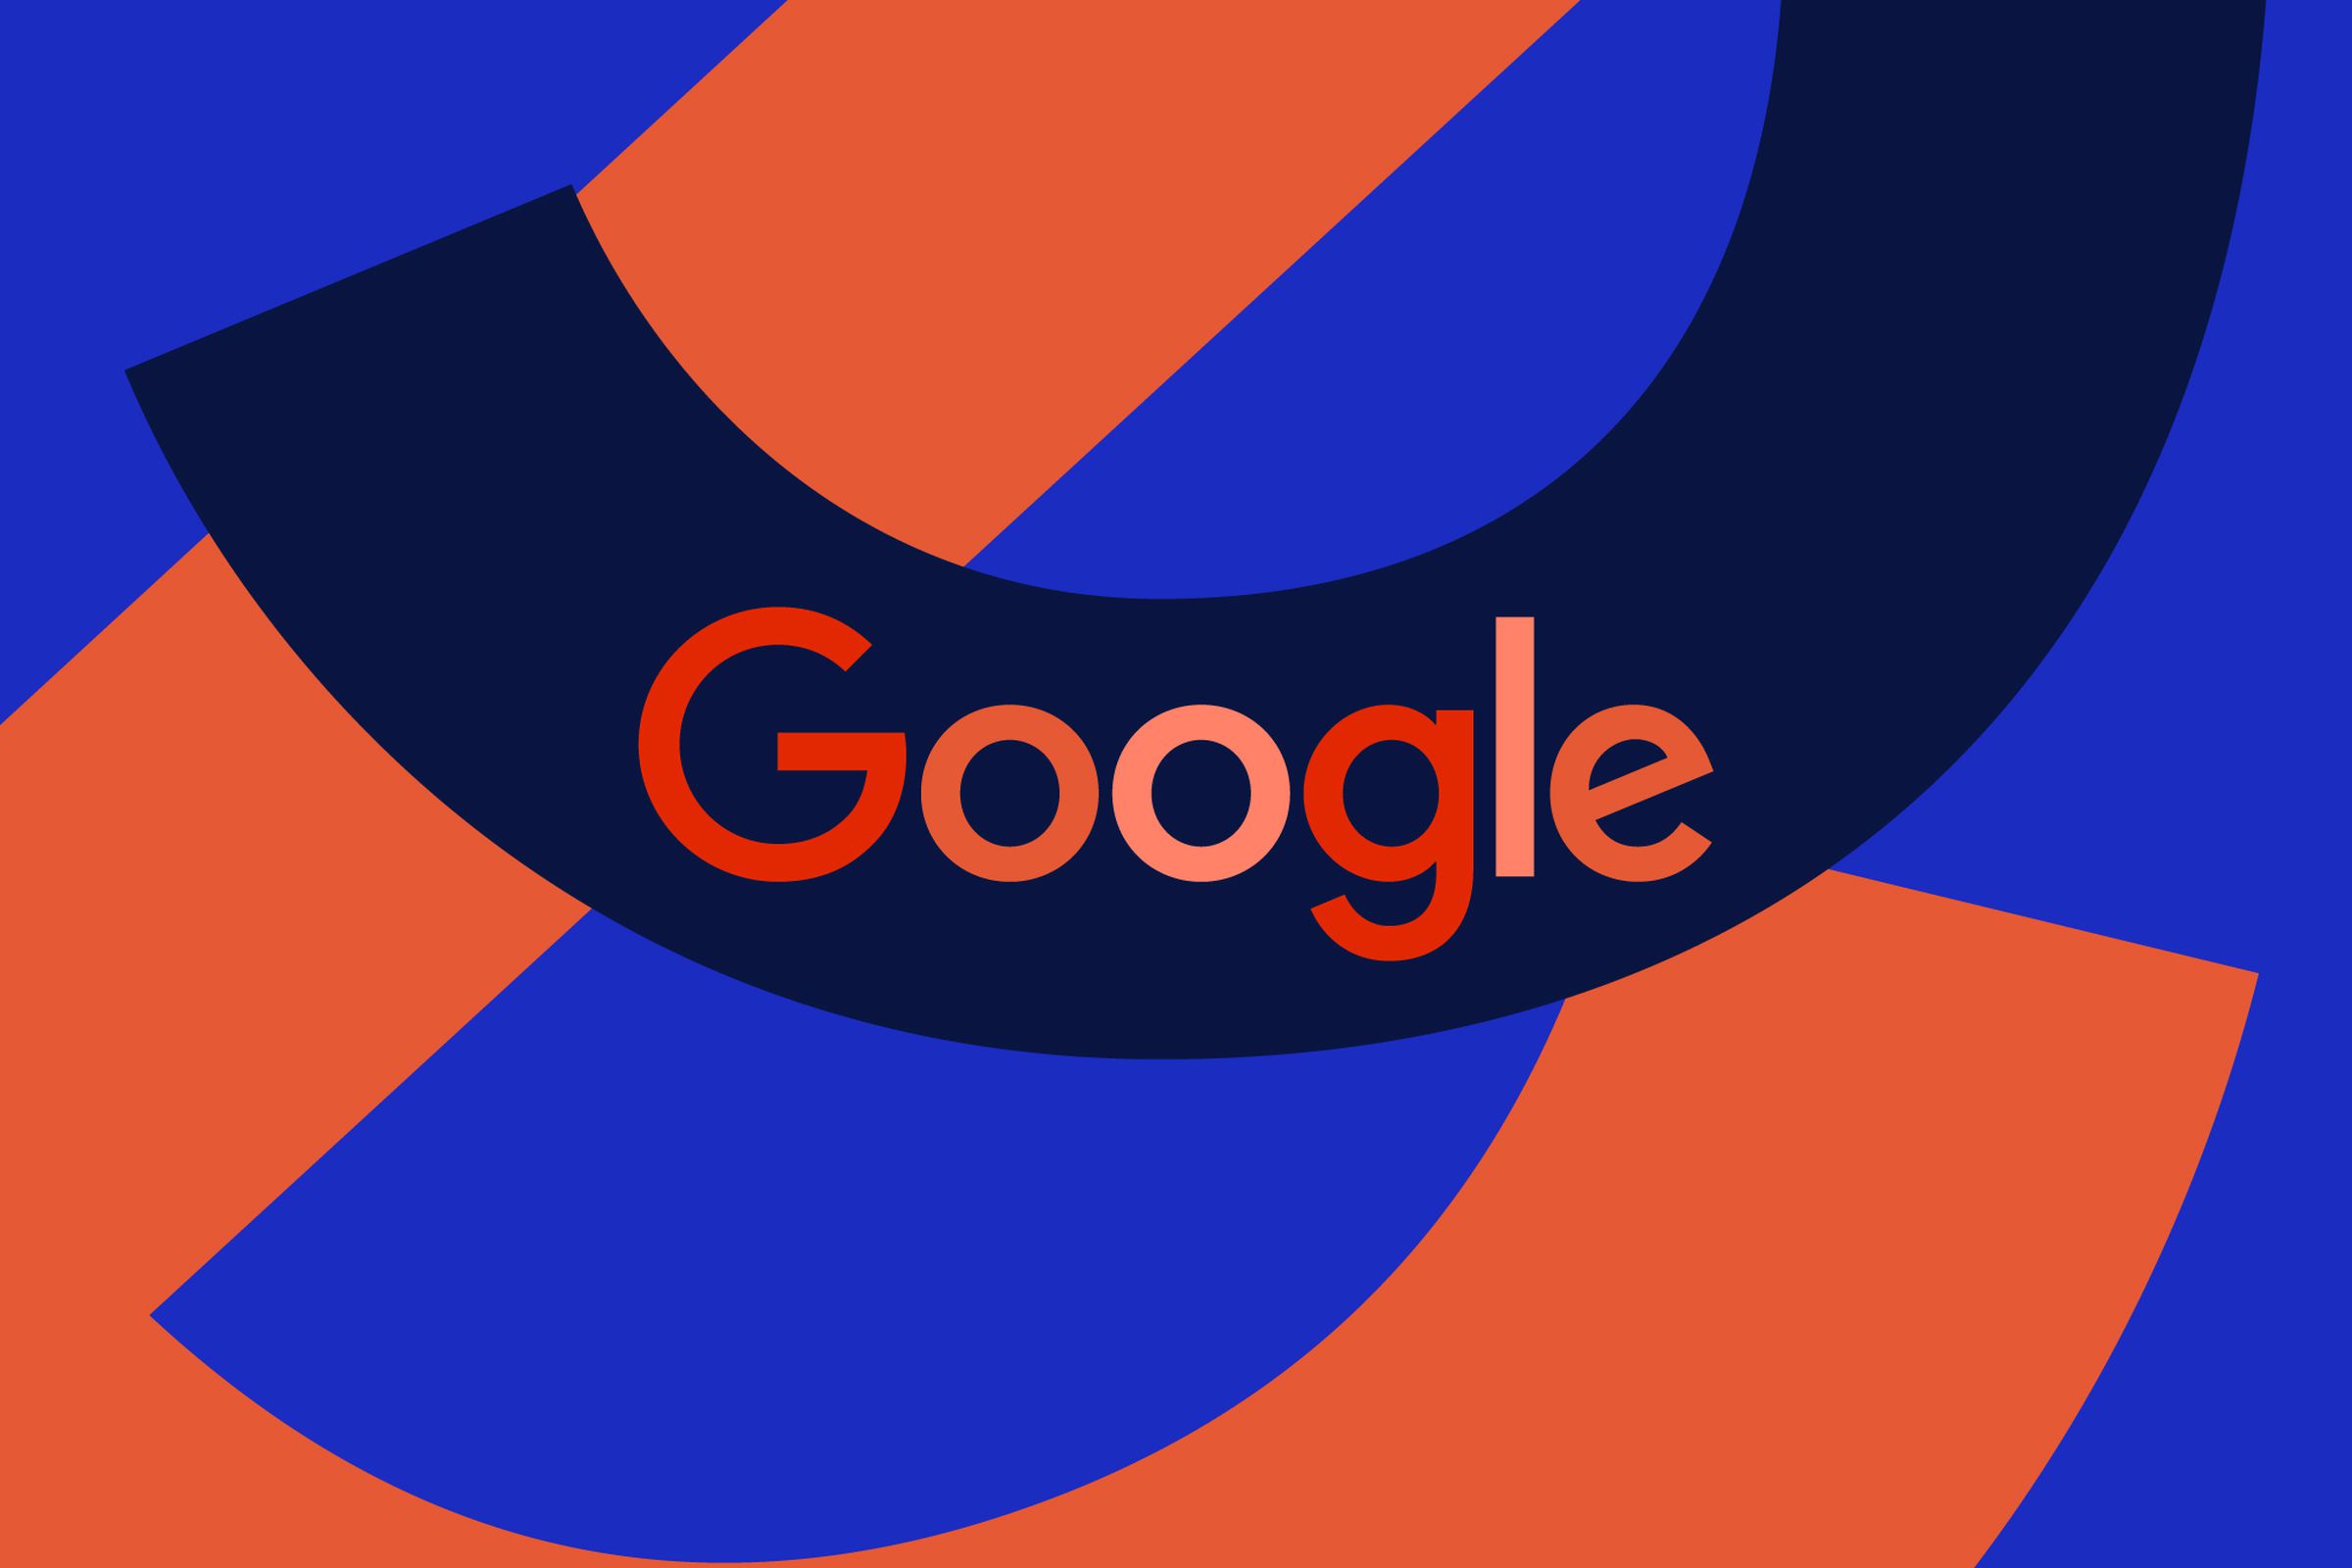 Ilustrasi logo Google, ditulis dalam warna merah dan merah muda dengan latar belakang biru tua.